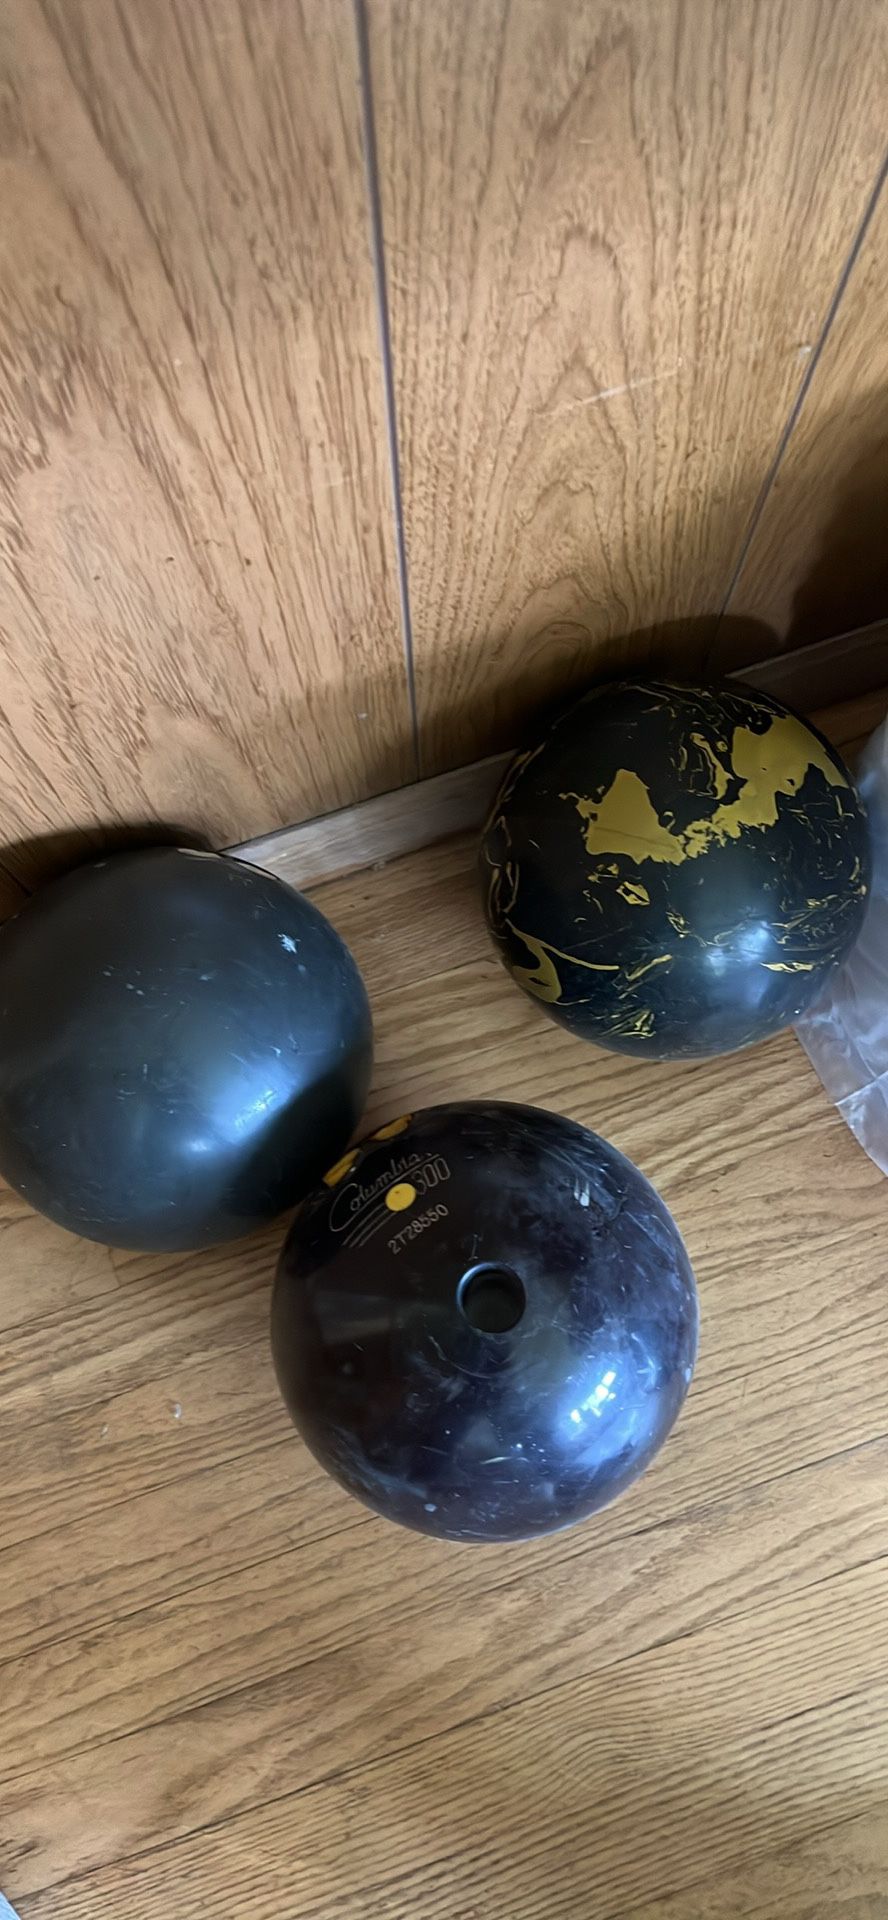 Bowling Balls 